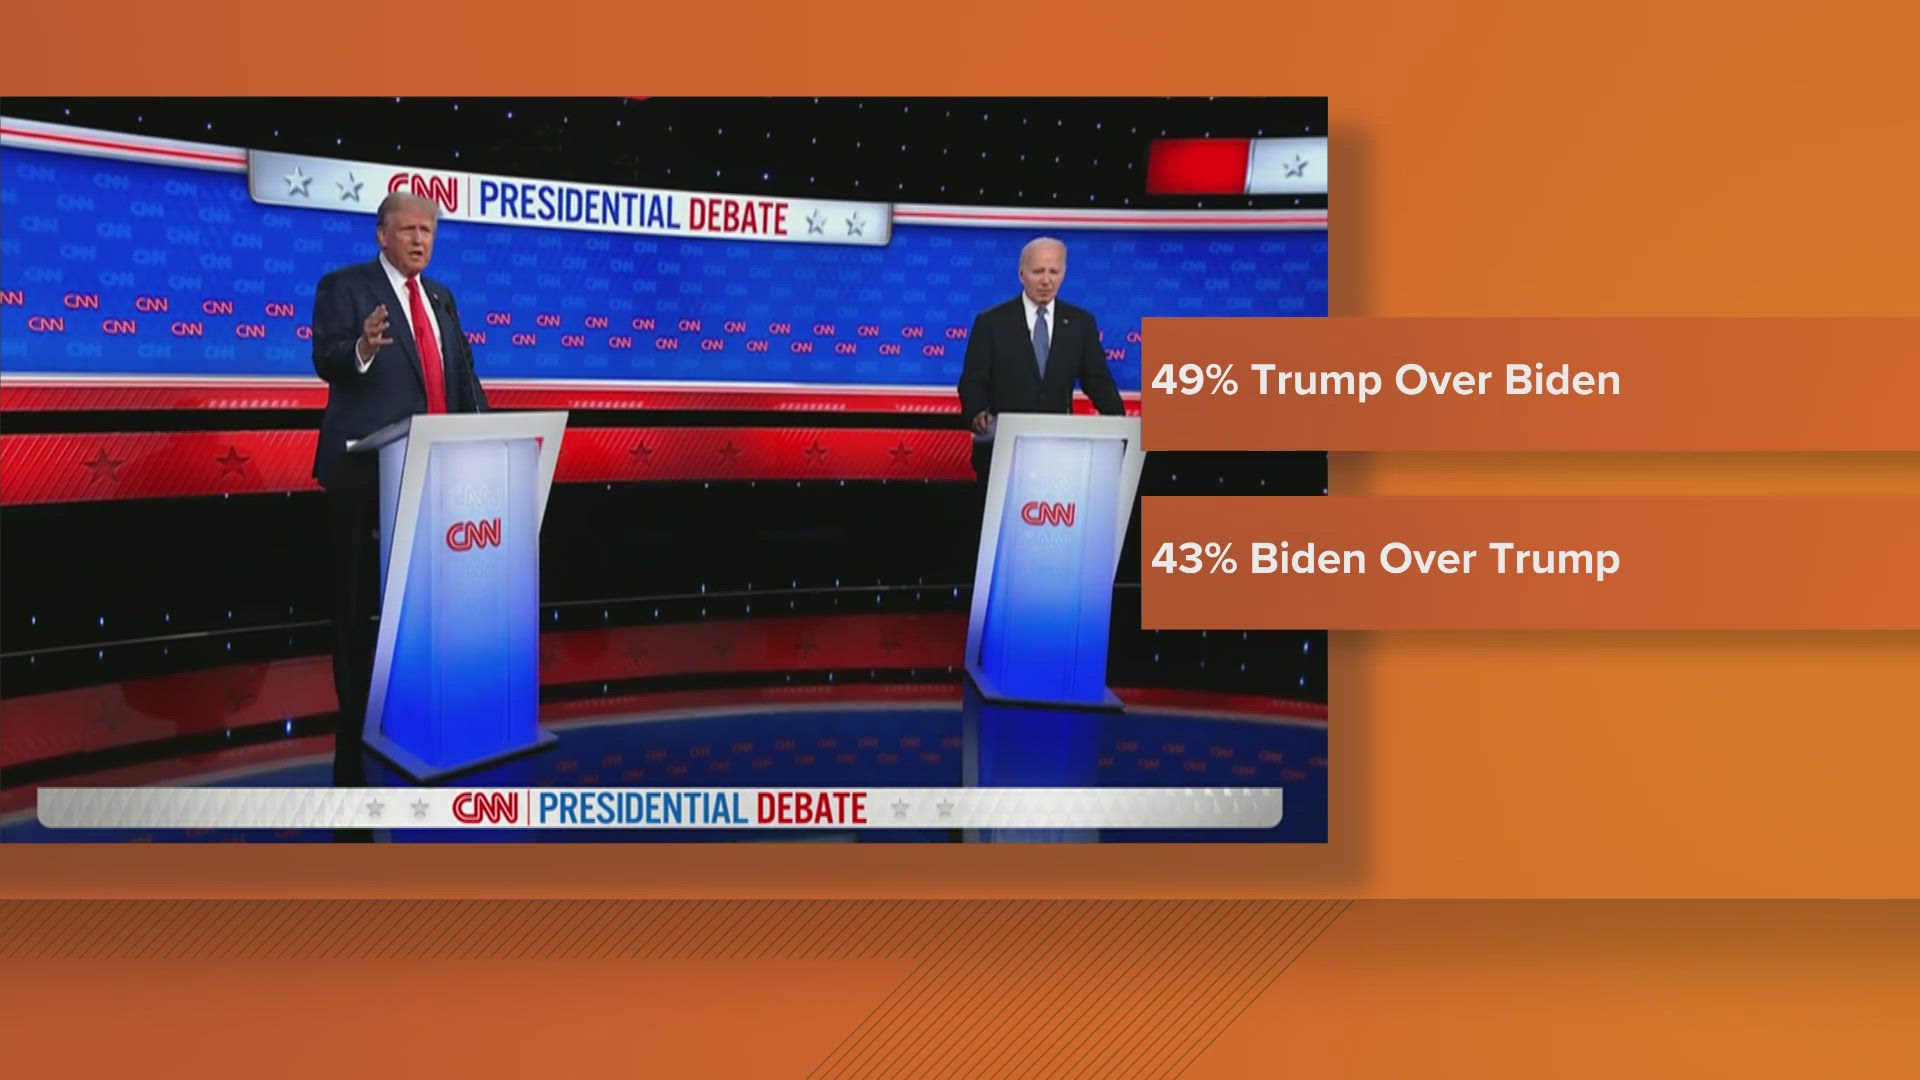 Recent polls show 49% prefer Trump over Biden.